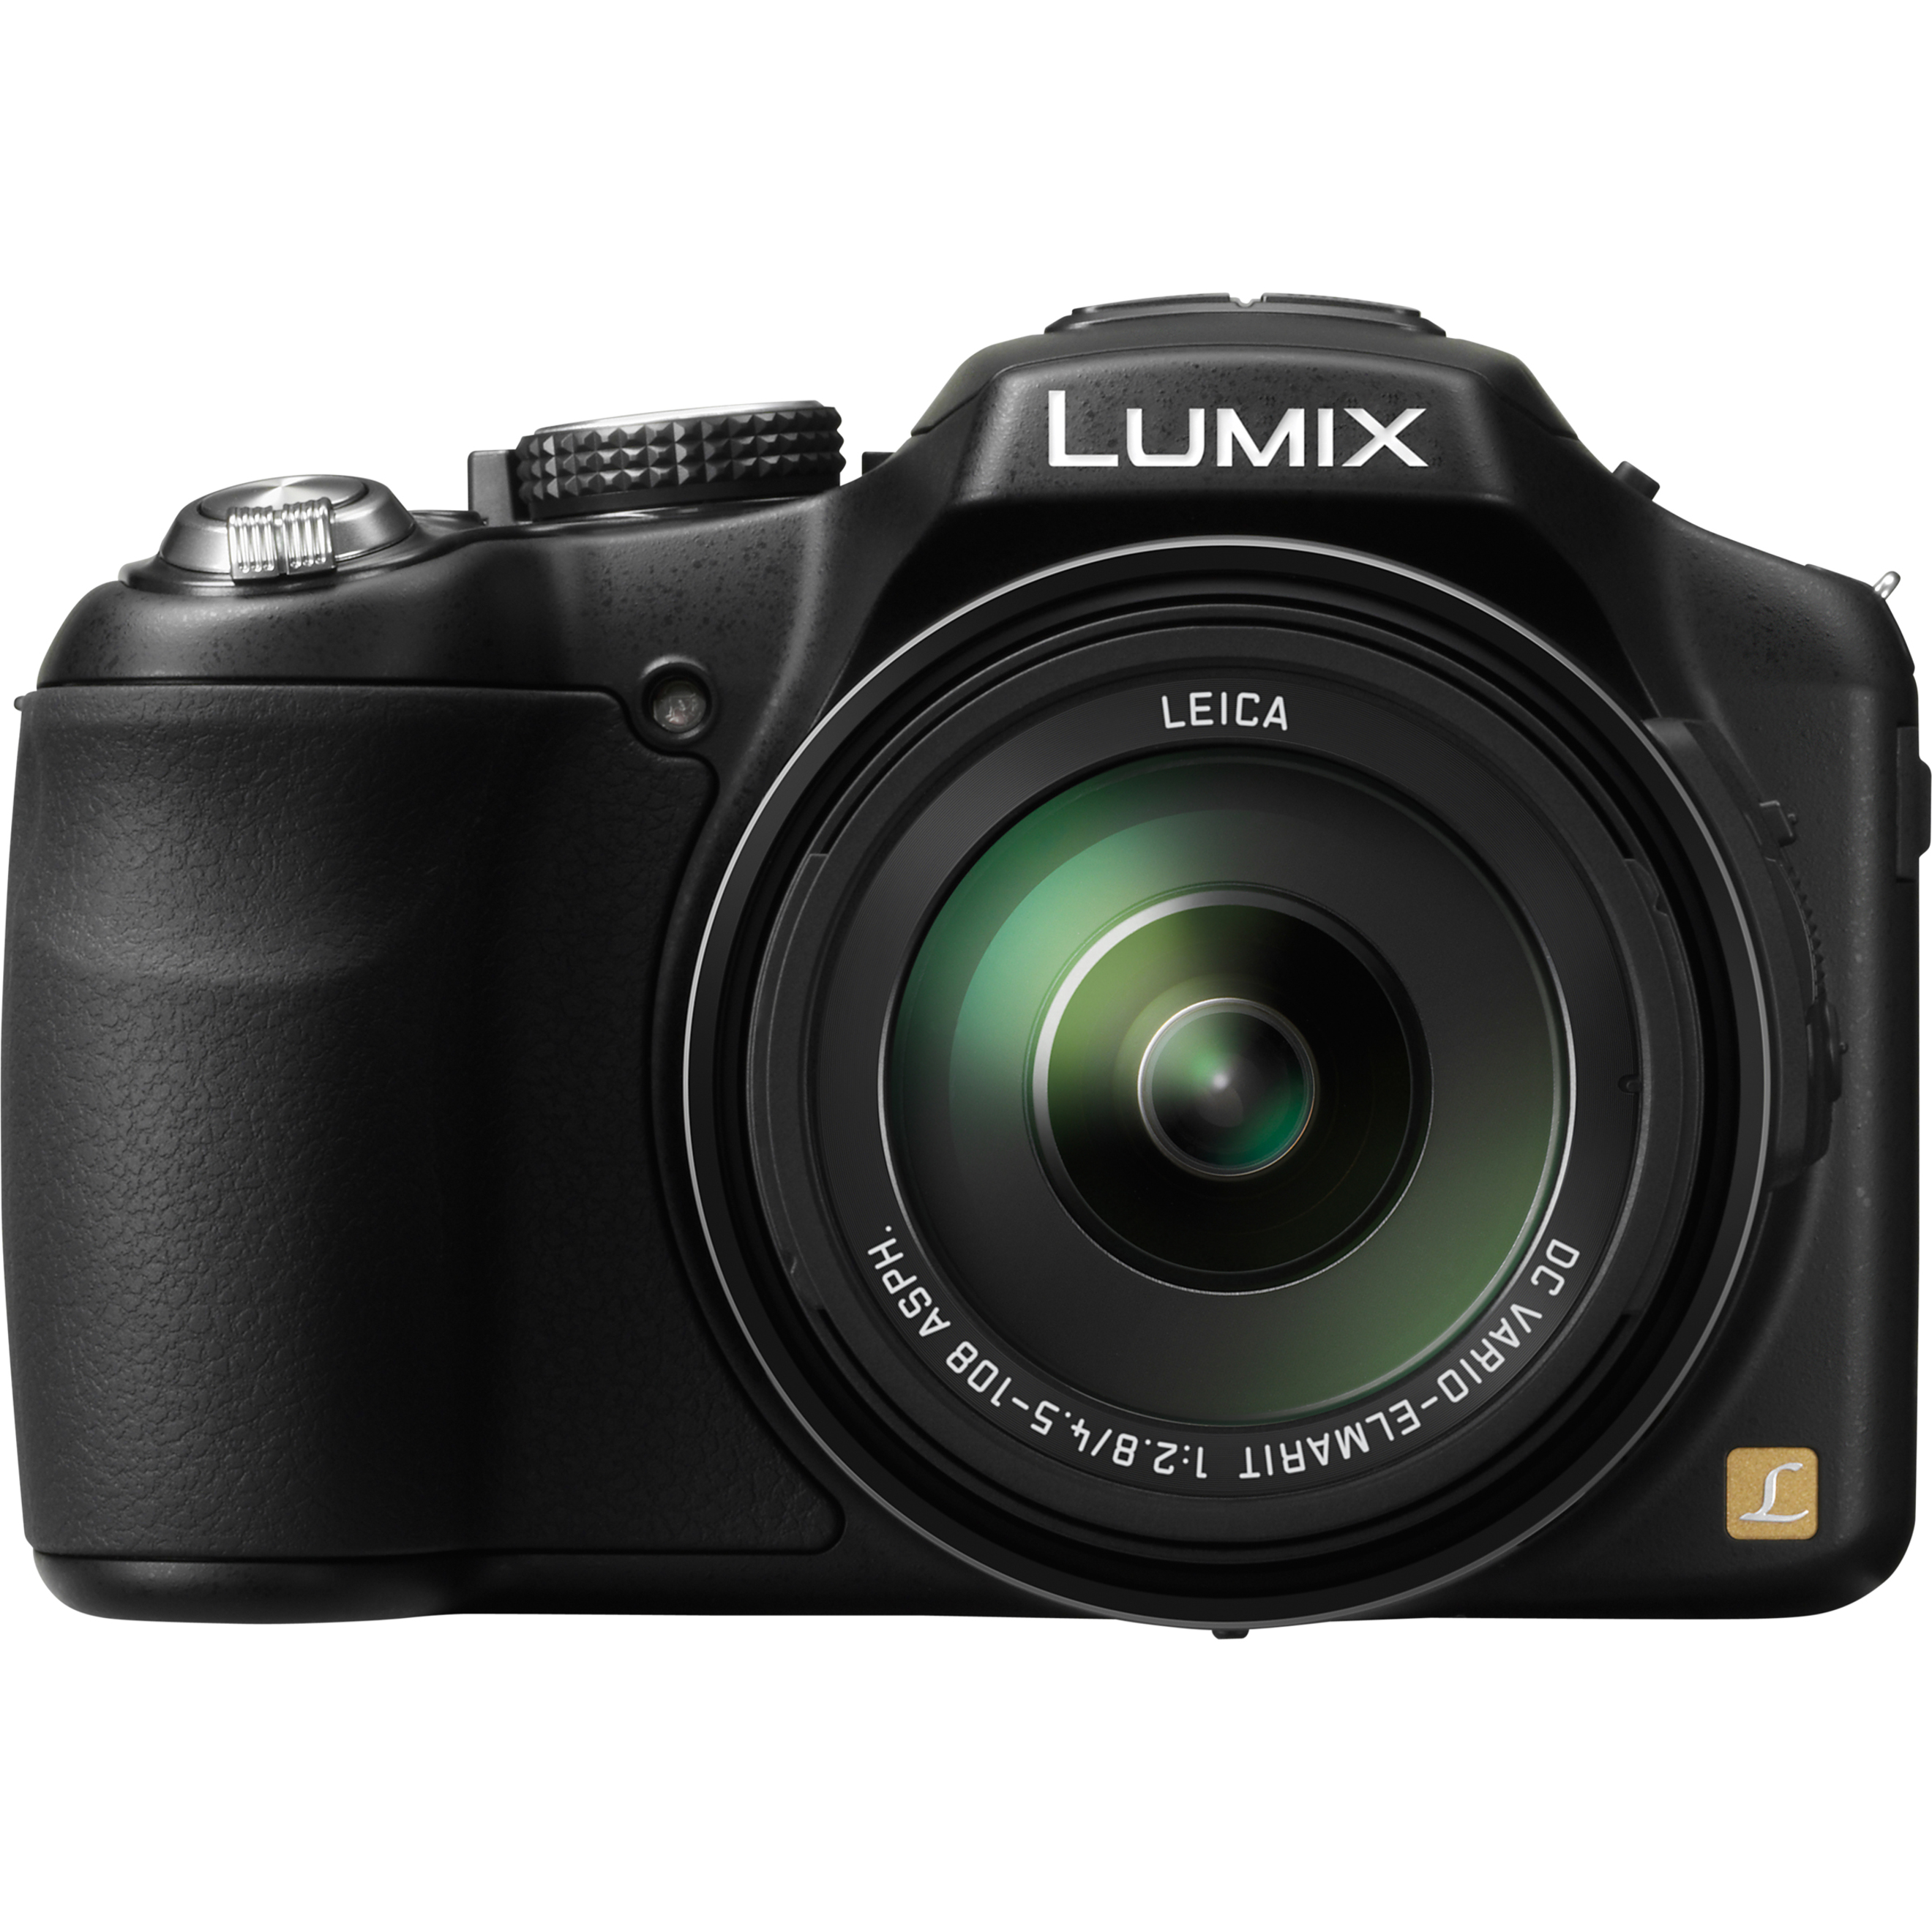 Panasonic Lumix DMC-FZ200 12.1 Megapixel Bridge Camera, Black - image 1 of 5